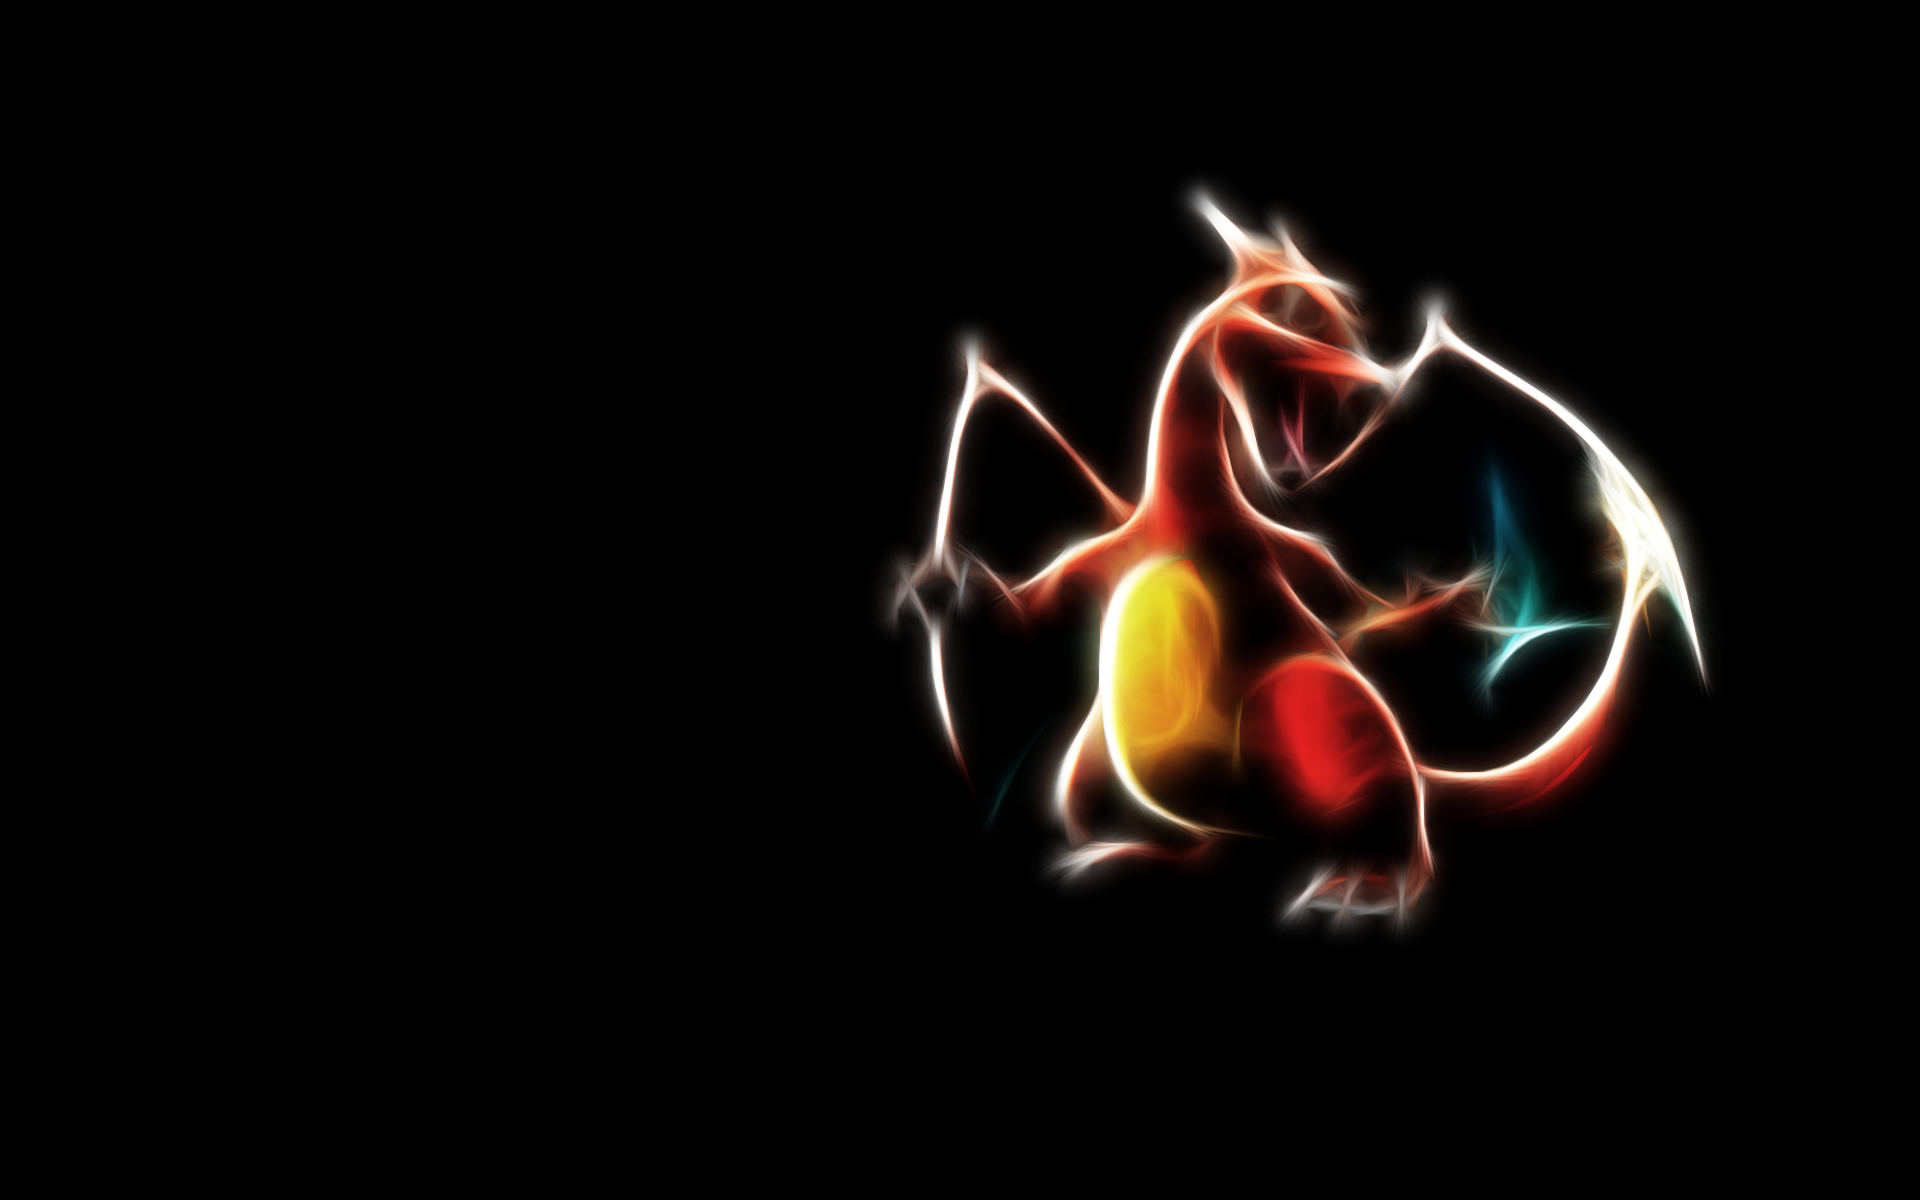 Charizard, a fire-breathing Pokémon, in vibrant high definition desktop wallpaper.